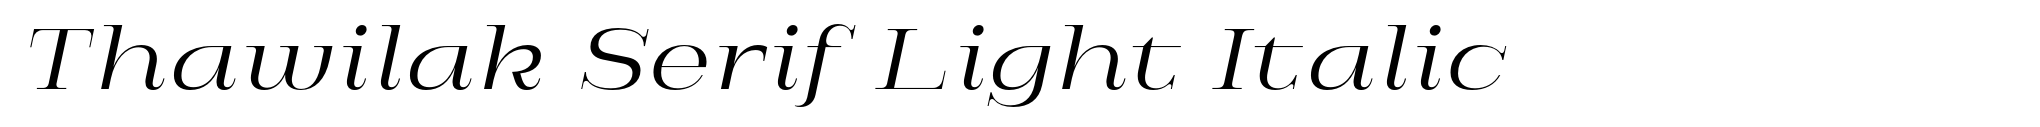 Thawilak Serif Light Italic image